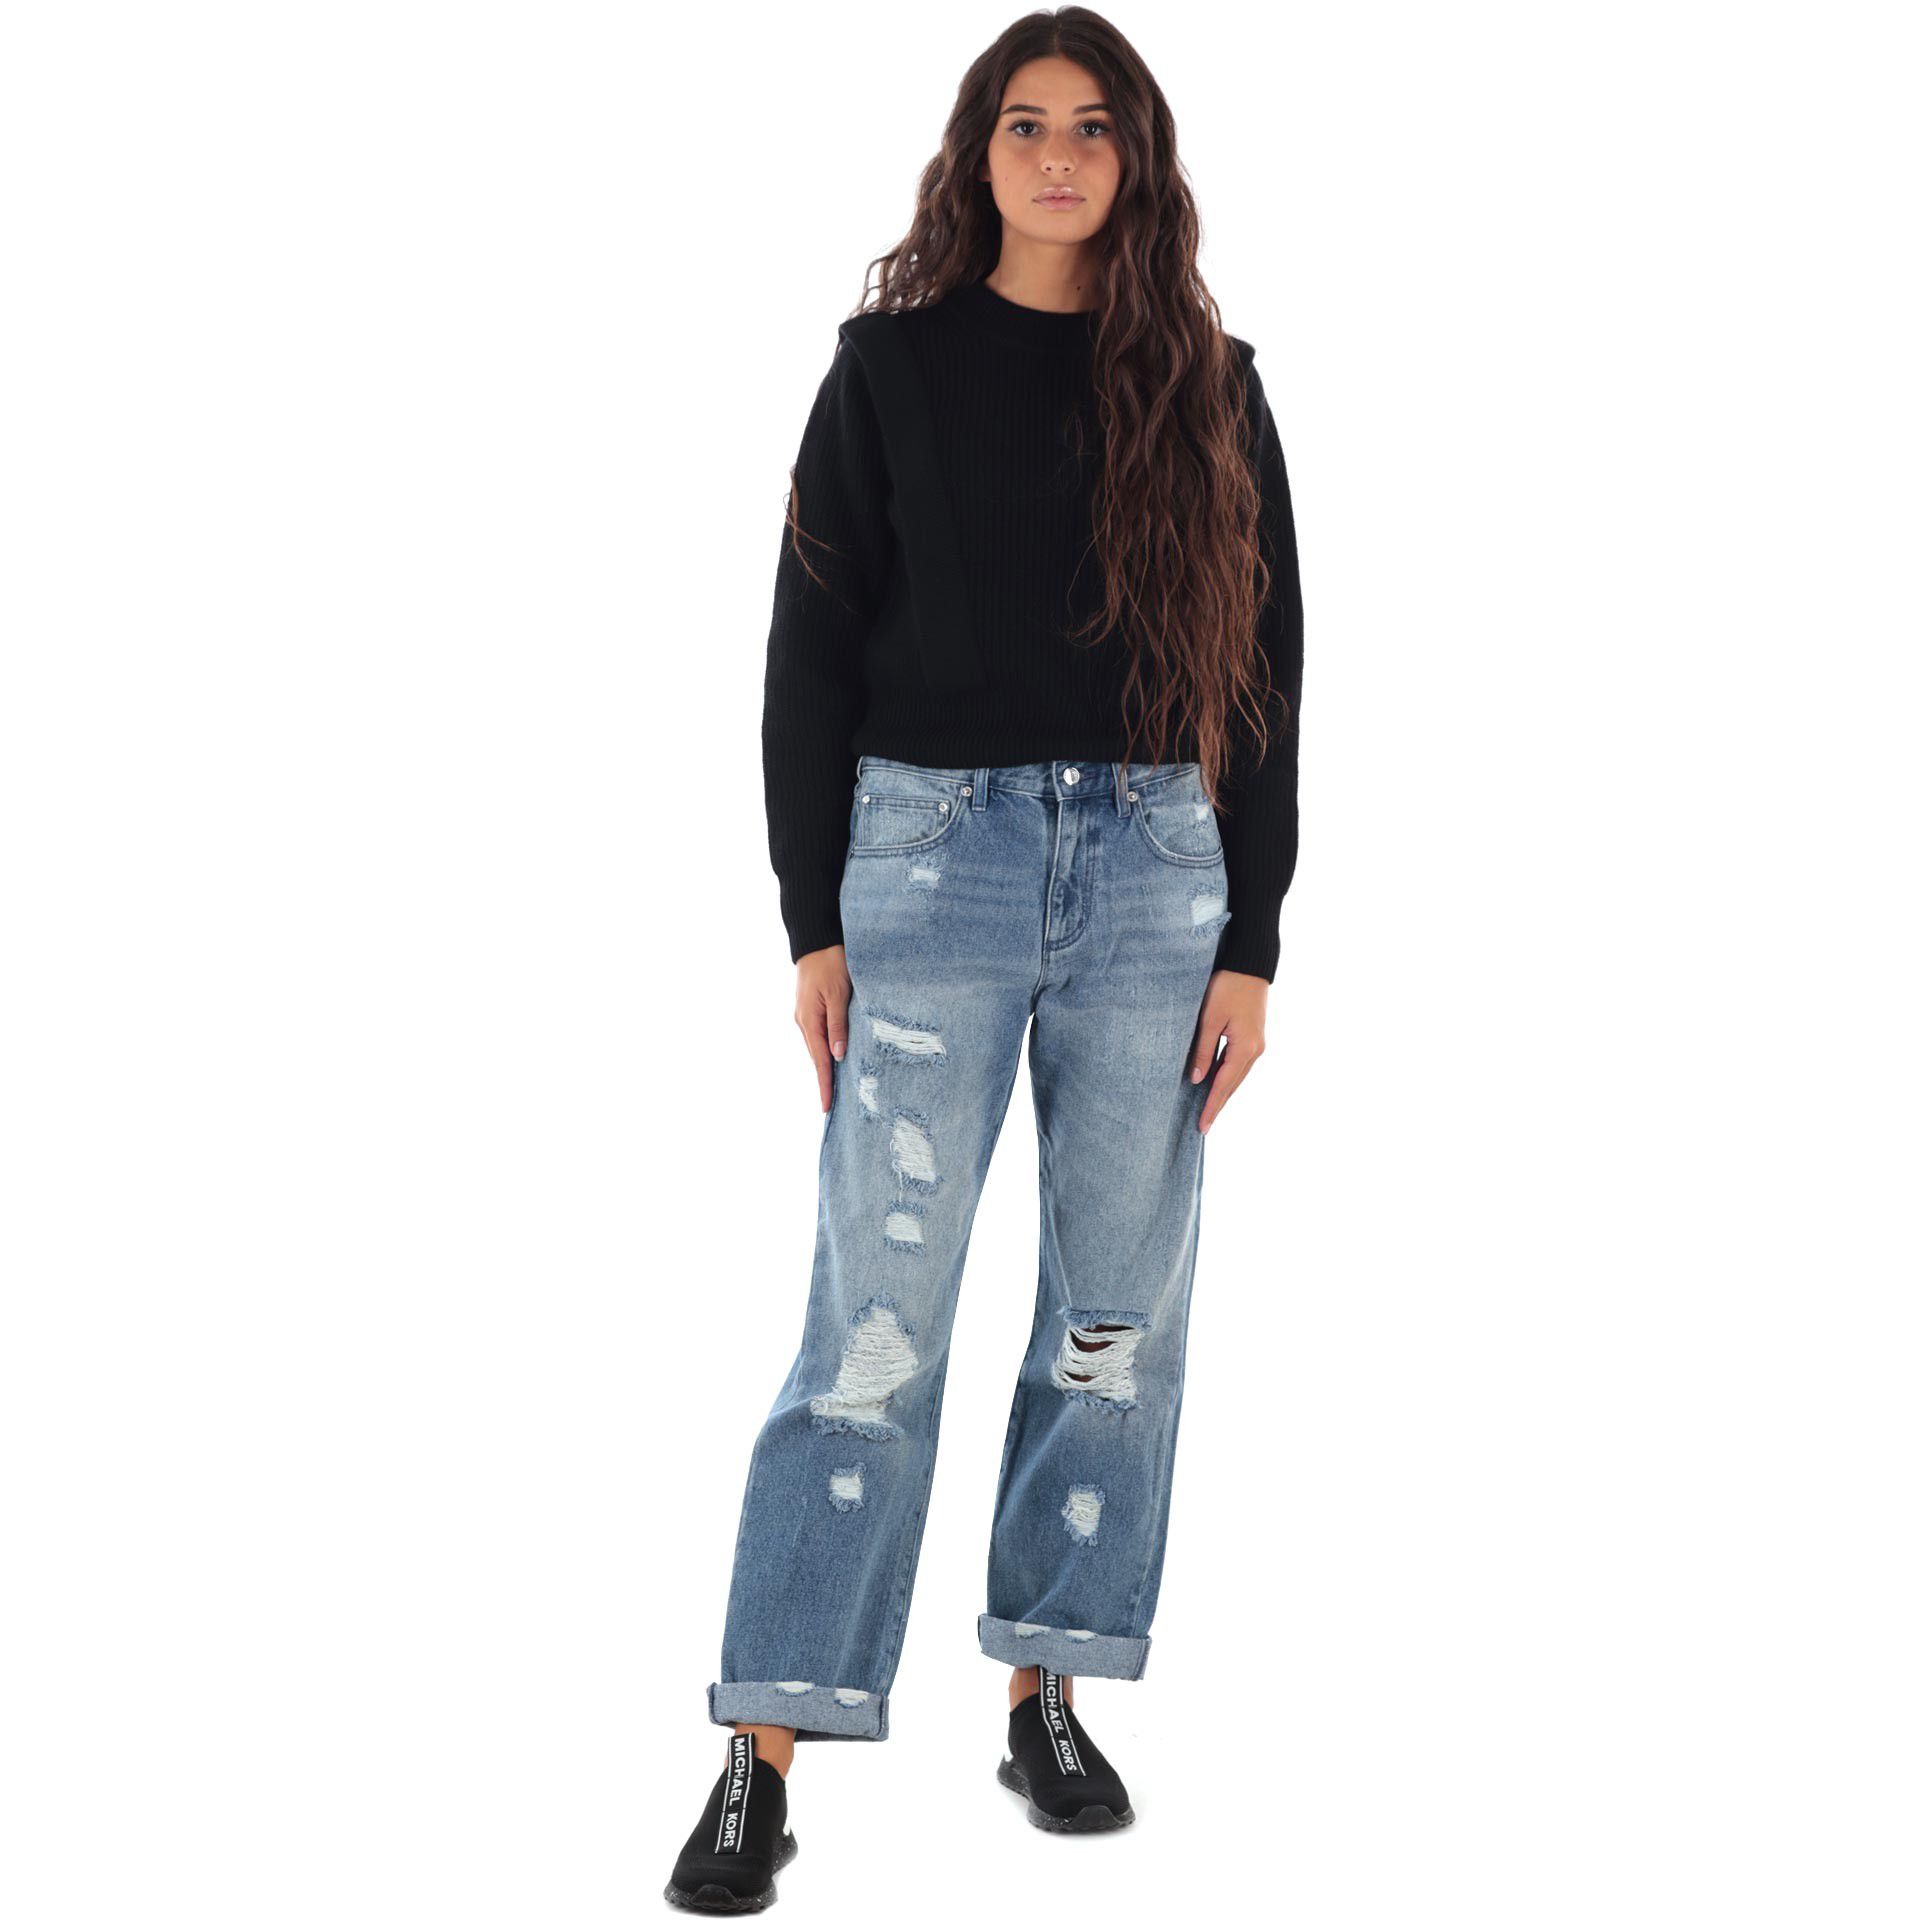 Michael kors jeans 5 tasche effetto consumato da donna